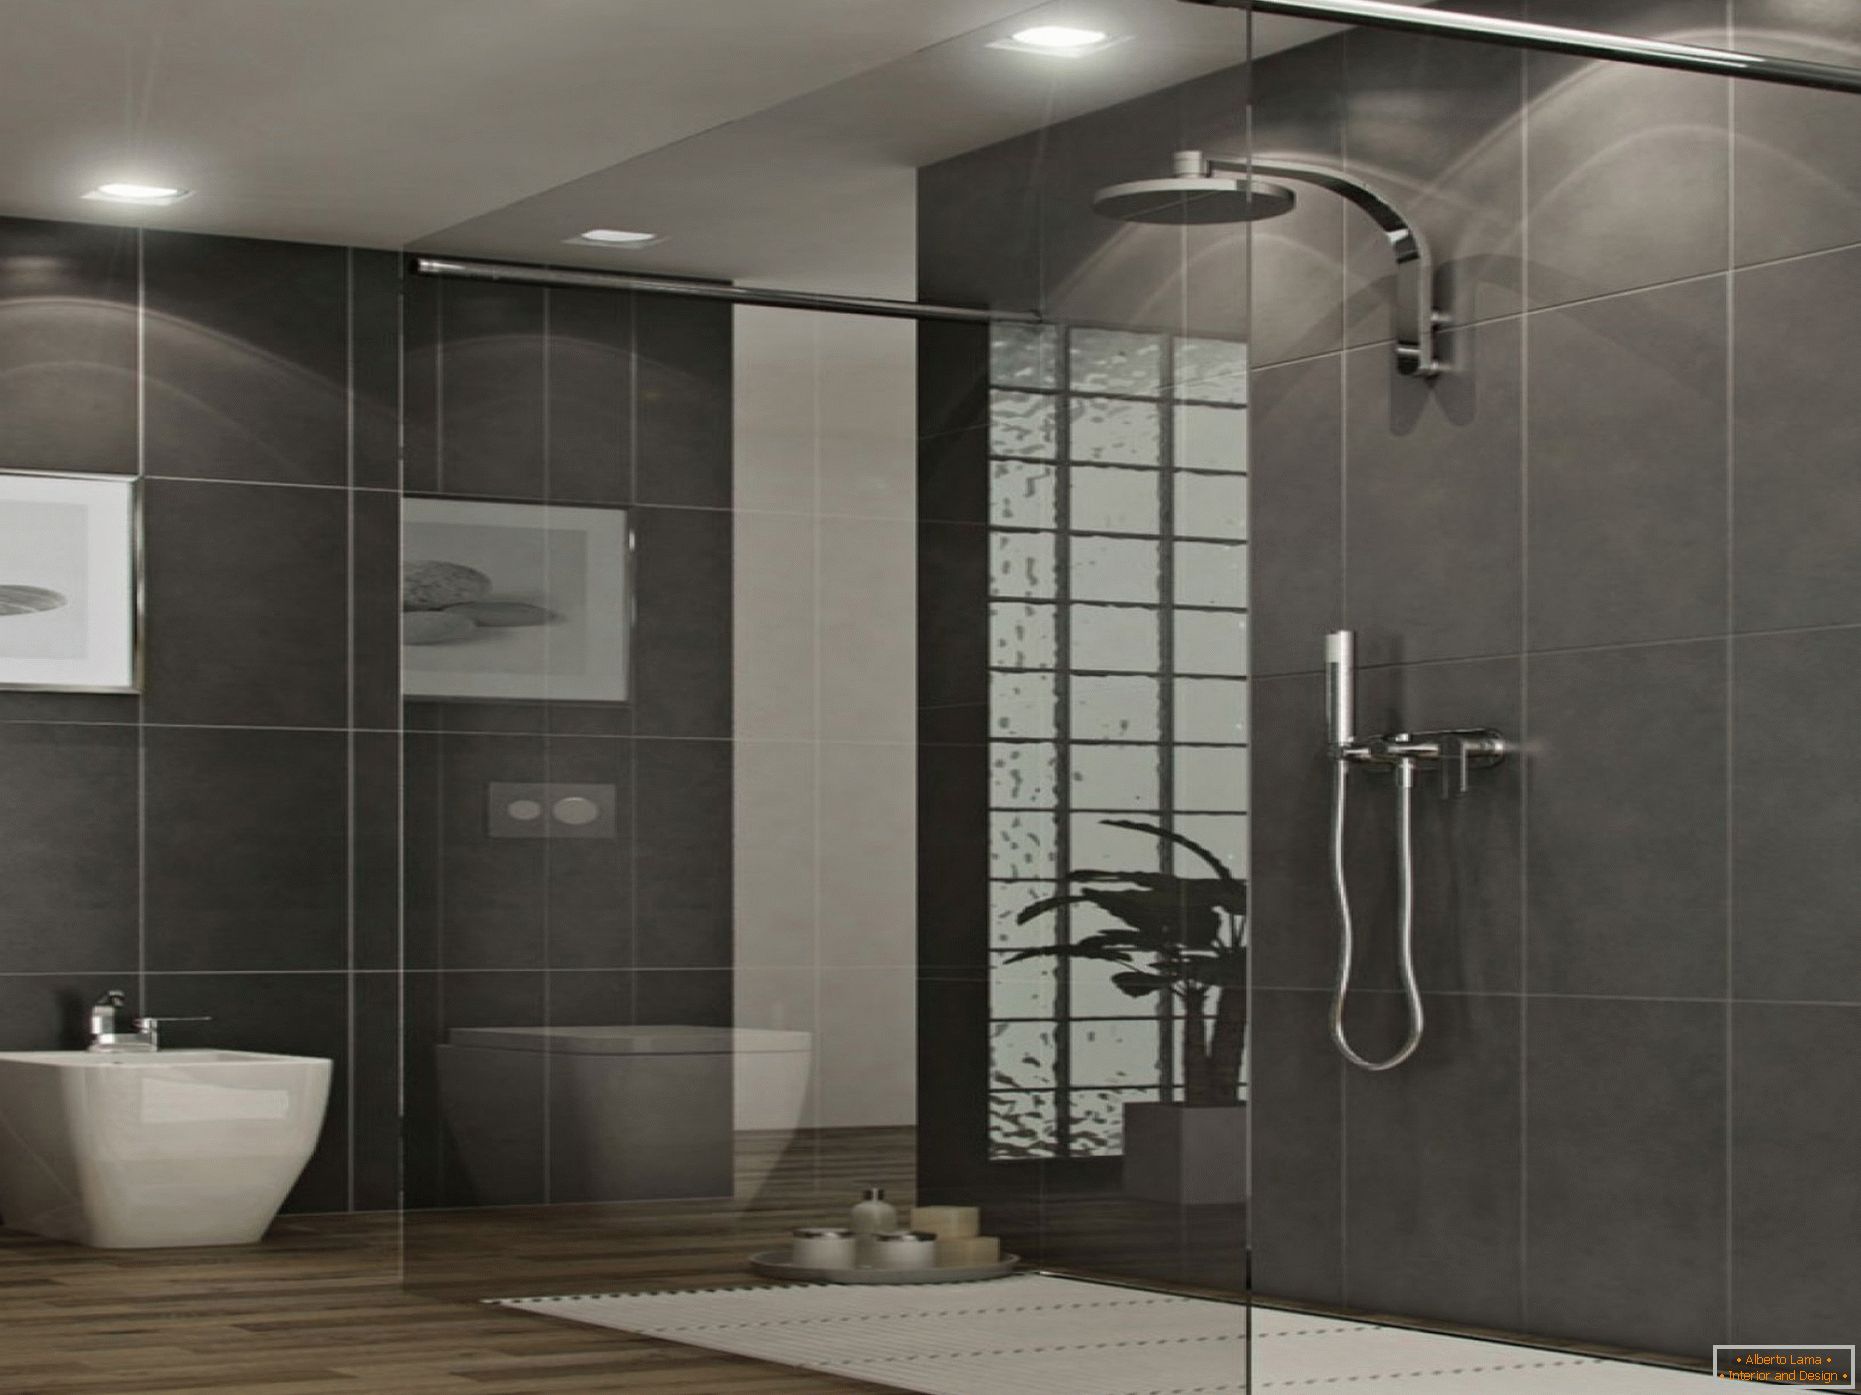 Large bathroom with black walls and beige floor